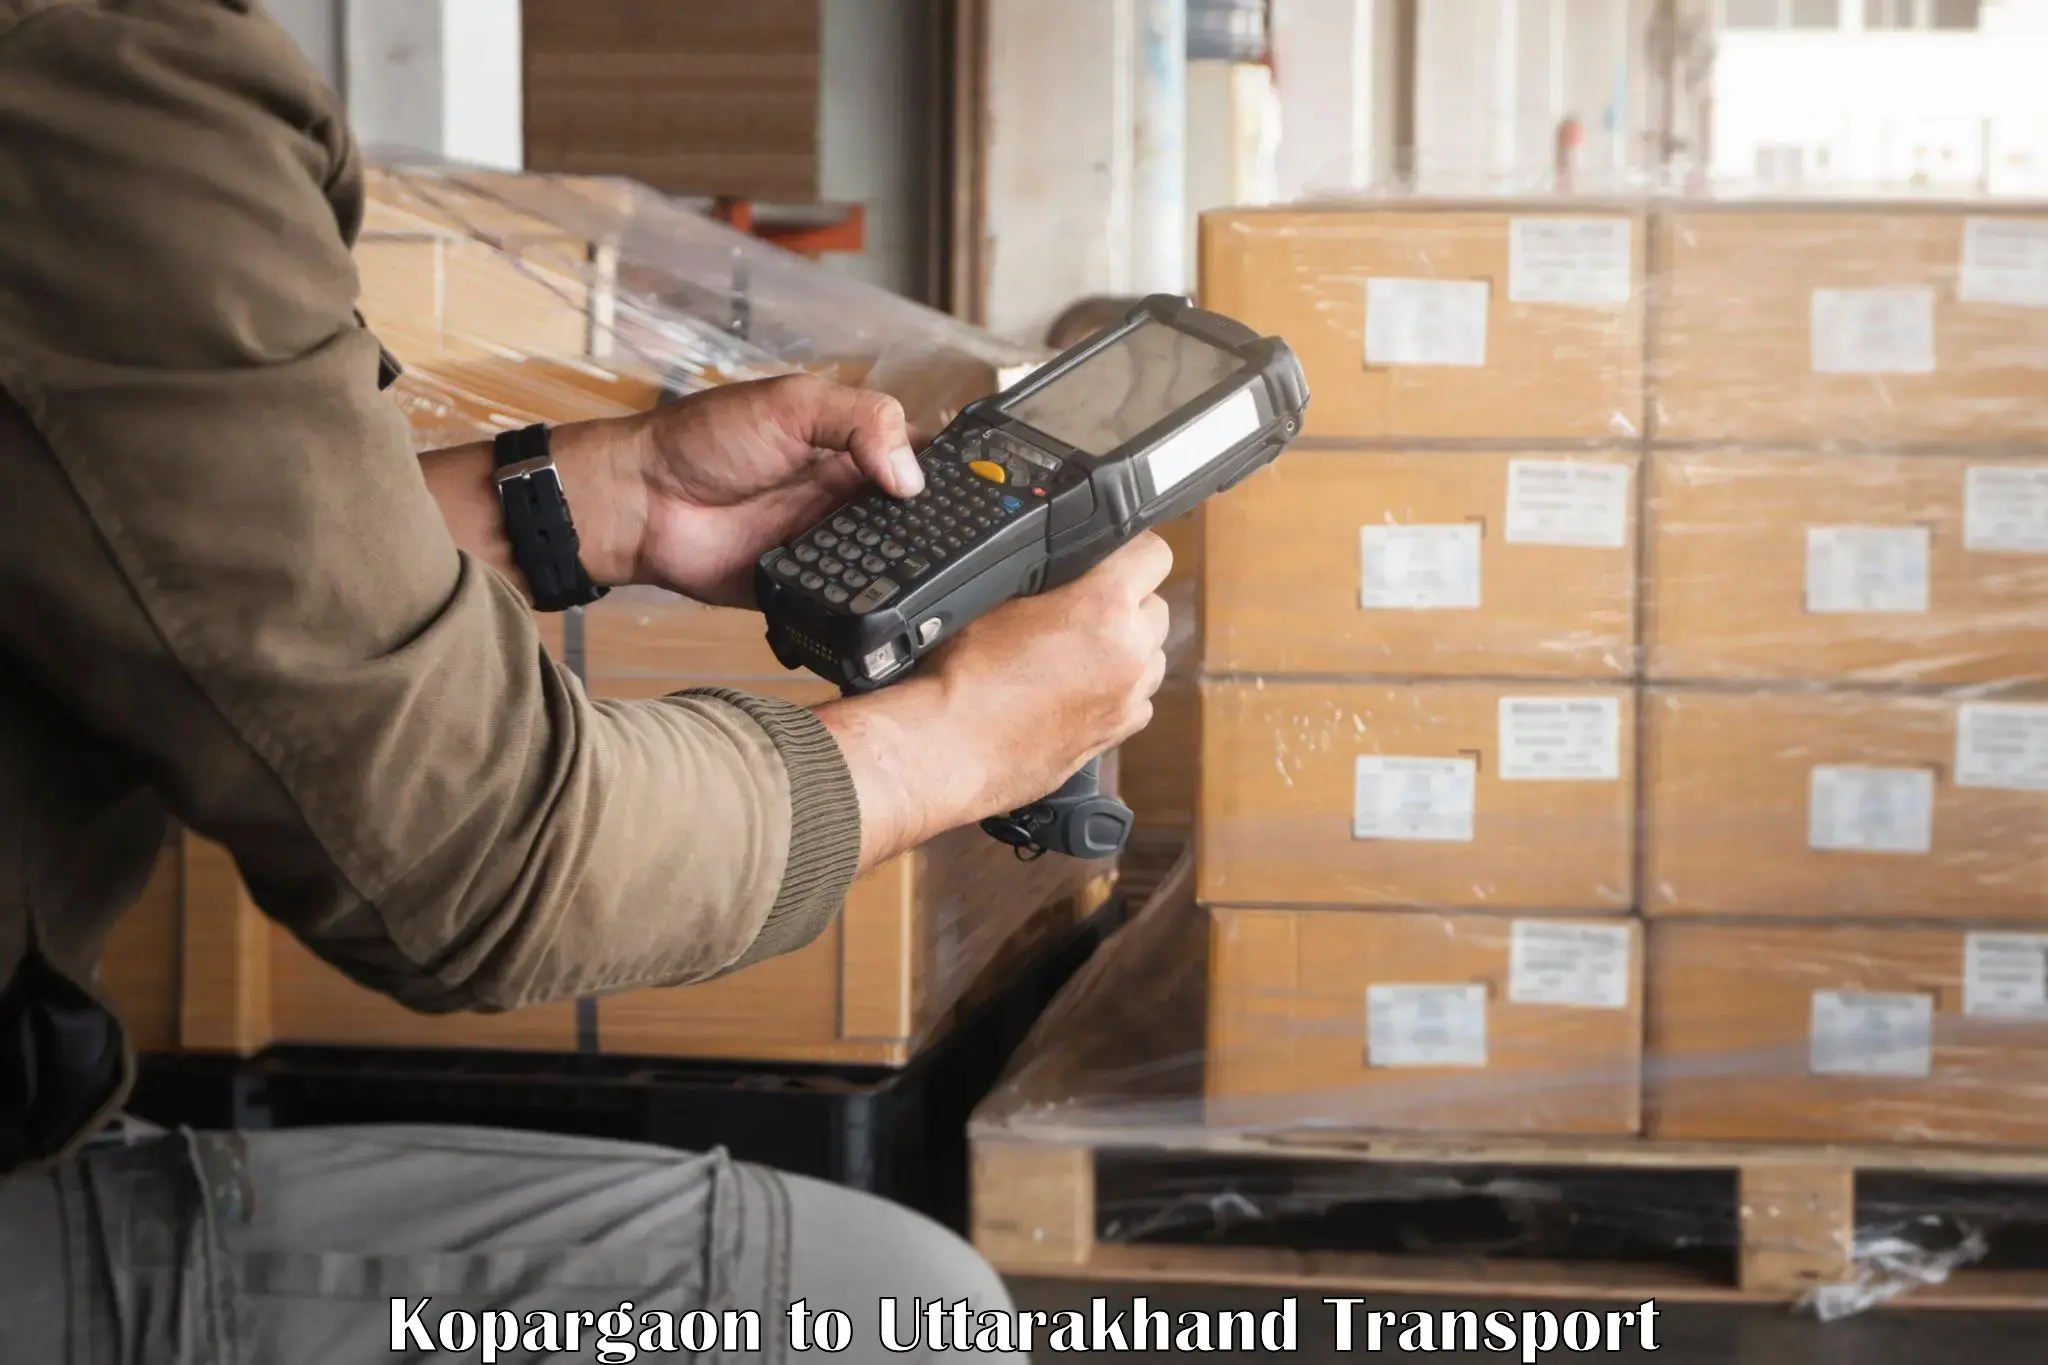 Daily parcel service transport Kopargaon to Uttarakhand